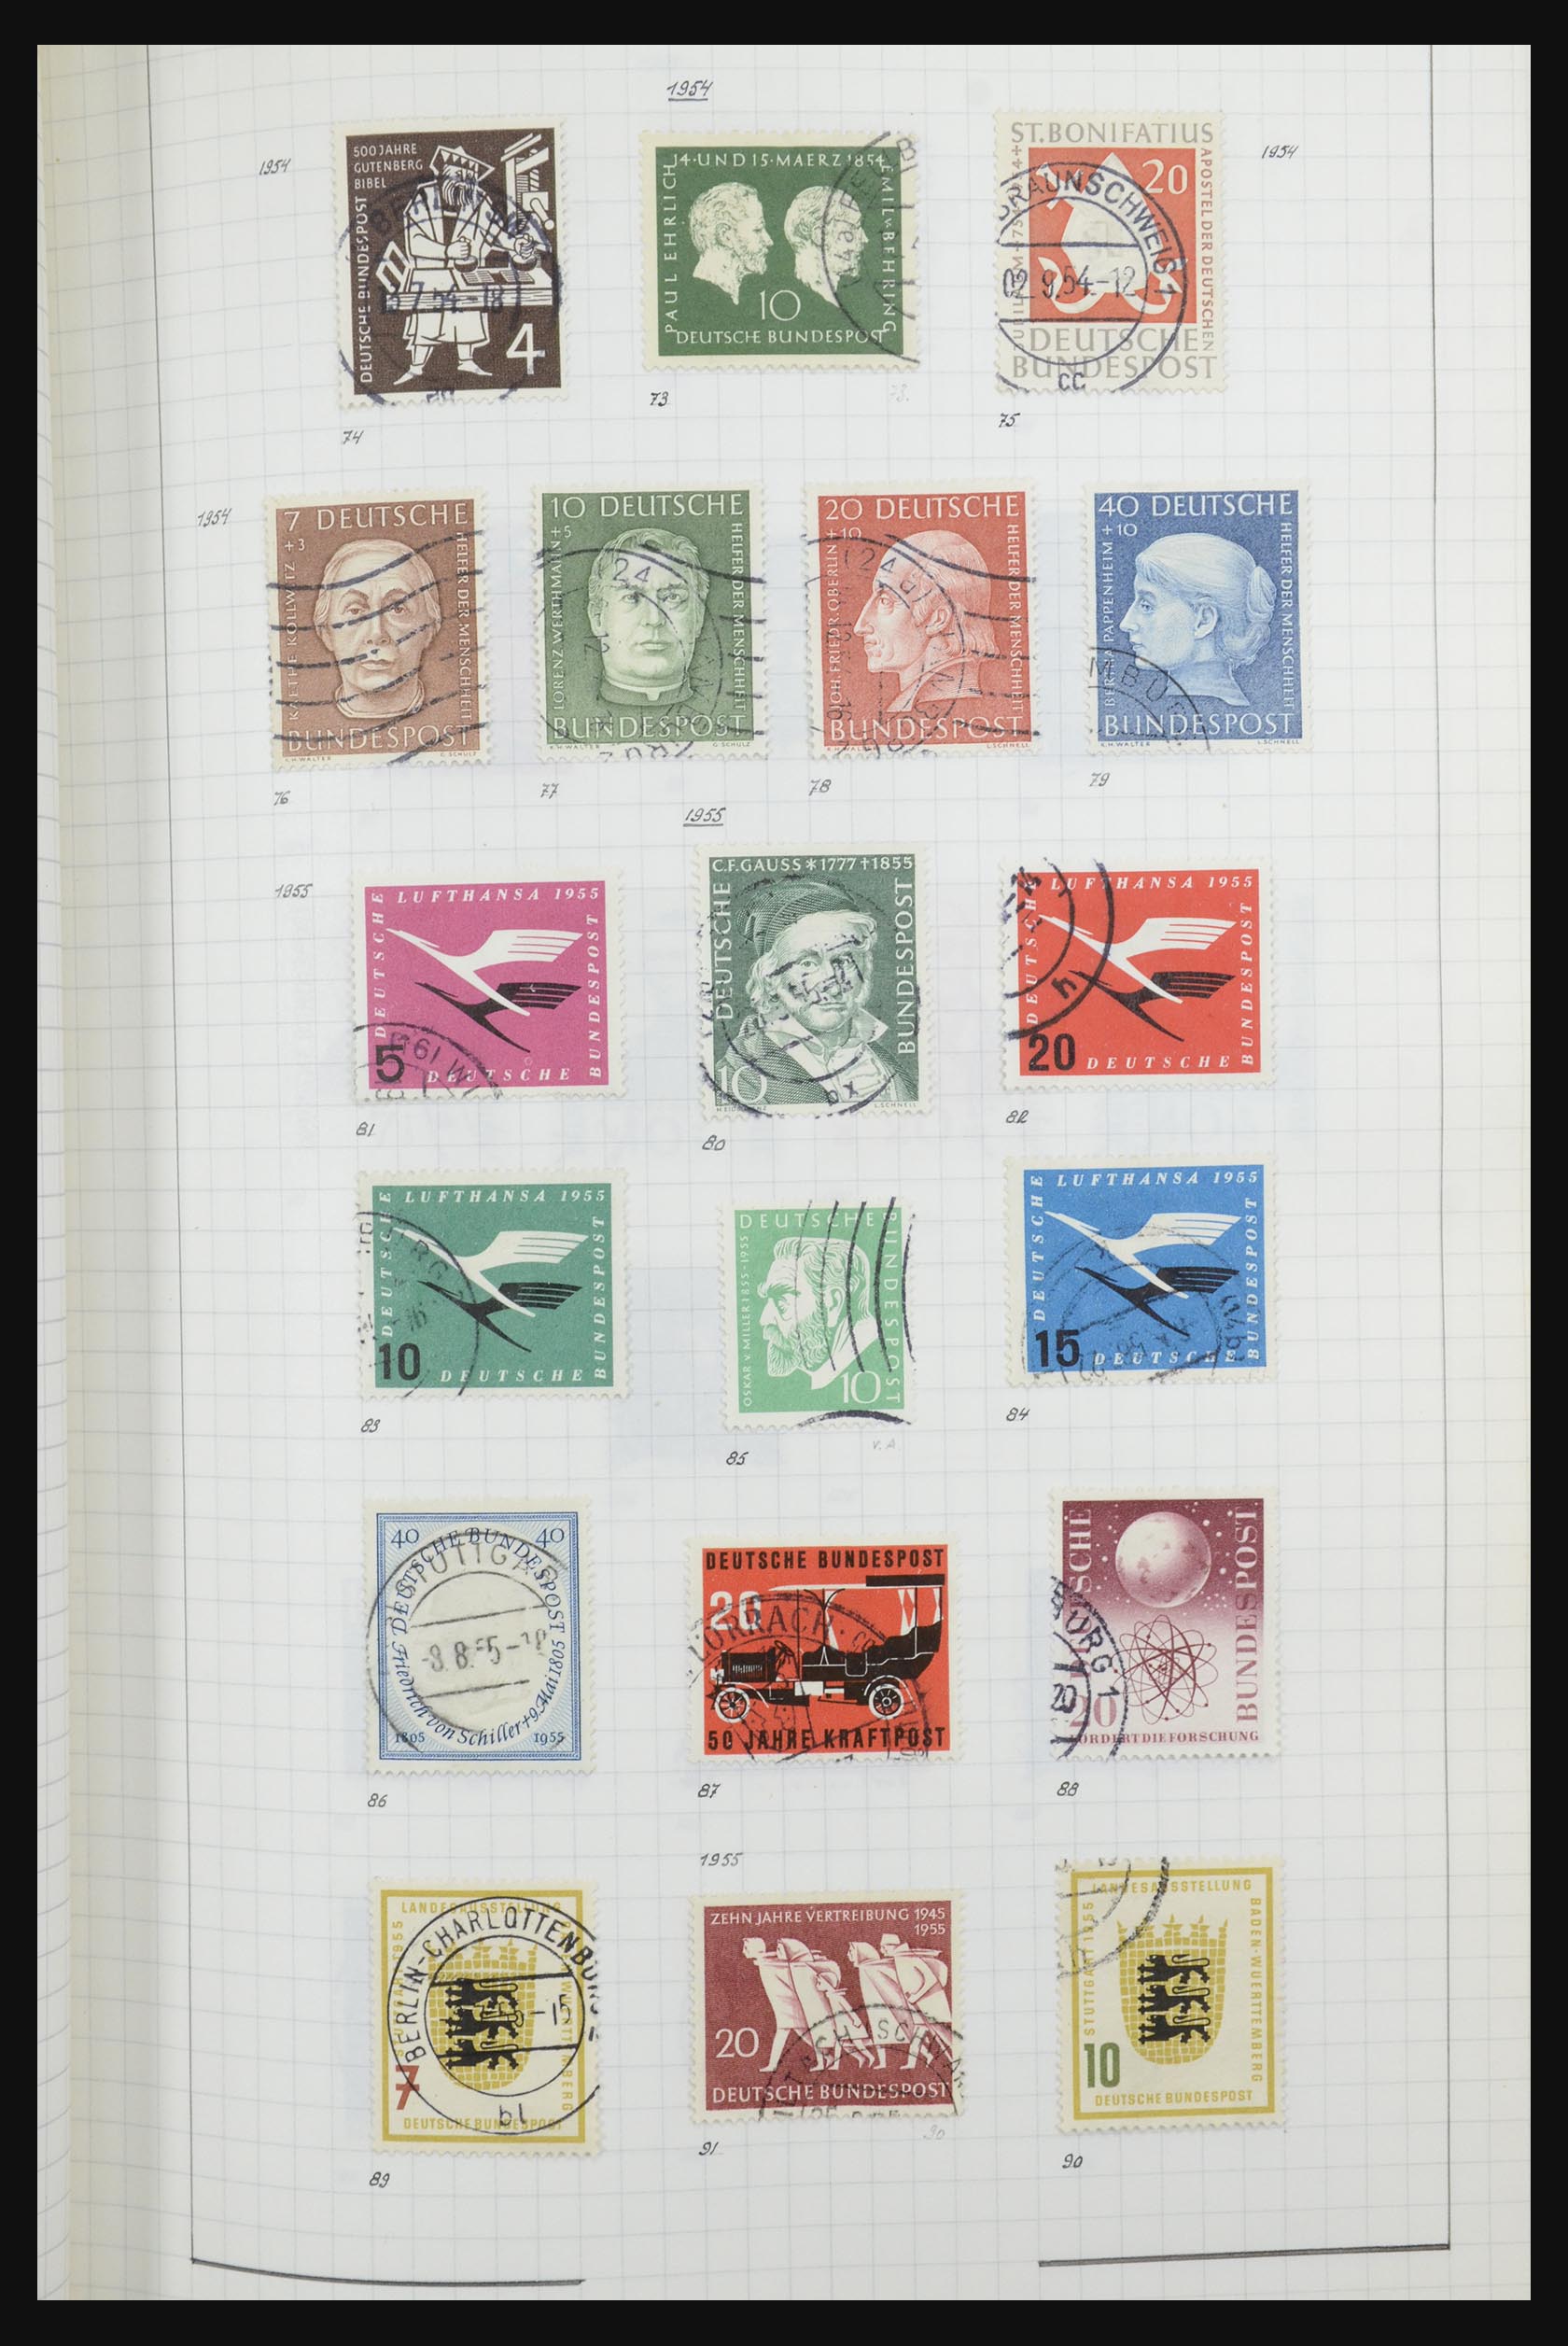 32398 008 - 32398 Bundespost and Berlin 1948-1984.